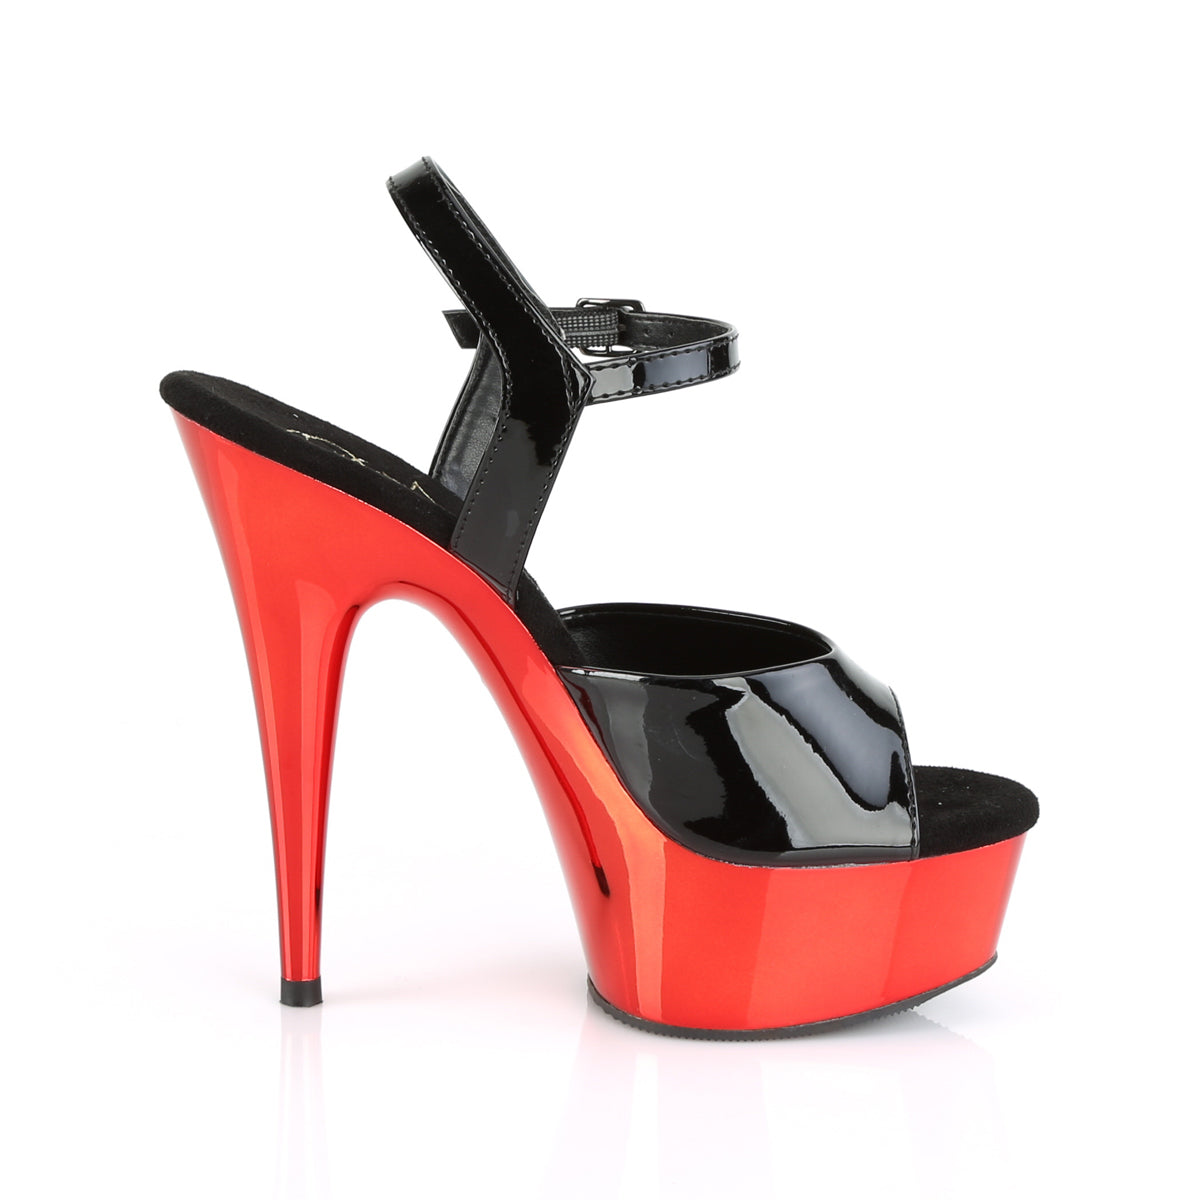 DELIGHT-609 Black Patent/Red Chrome Platform Sandal Pleaser